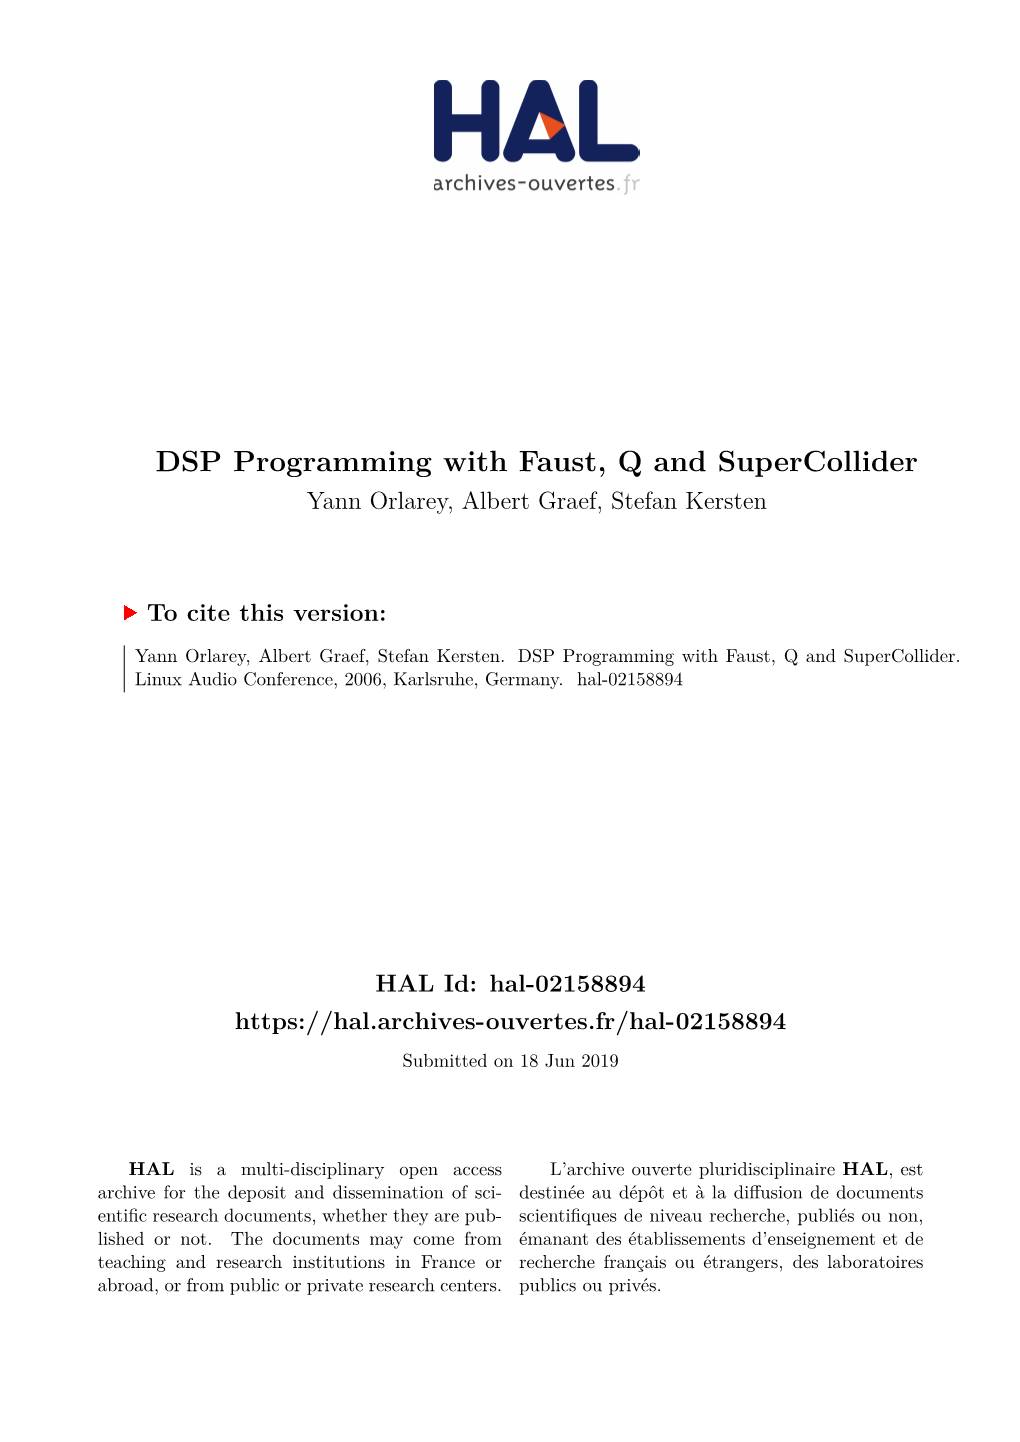 DSP Programming with Faust, Q and Supercollider Yann Orlarey, Albert Graef, Stefan Kersten